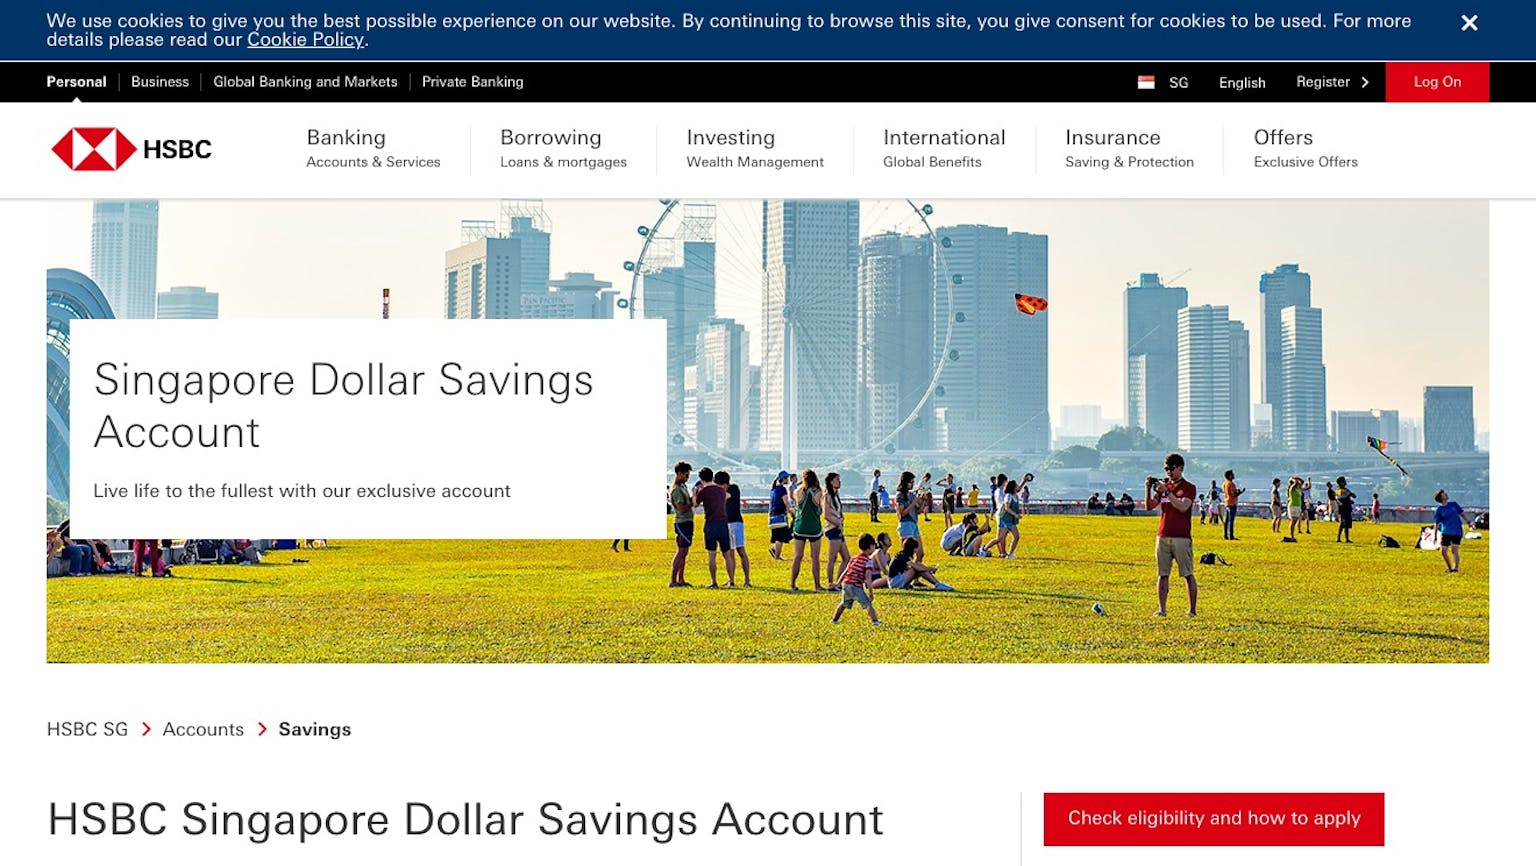 HSBC Singapore Dollar Savings Account